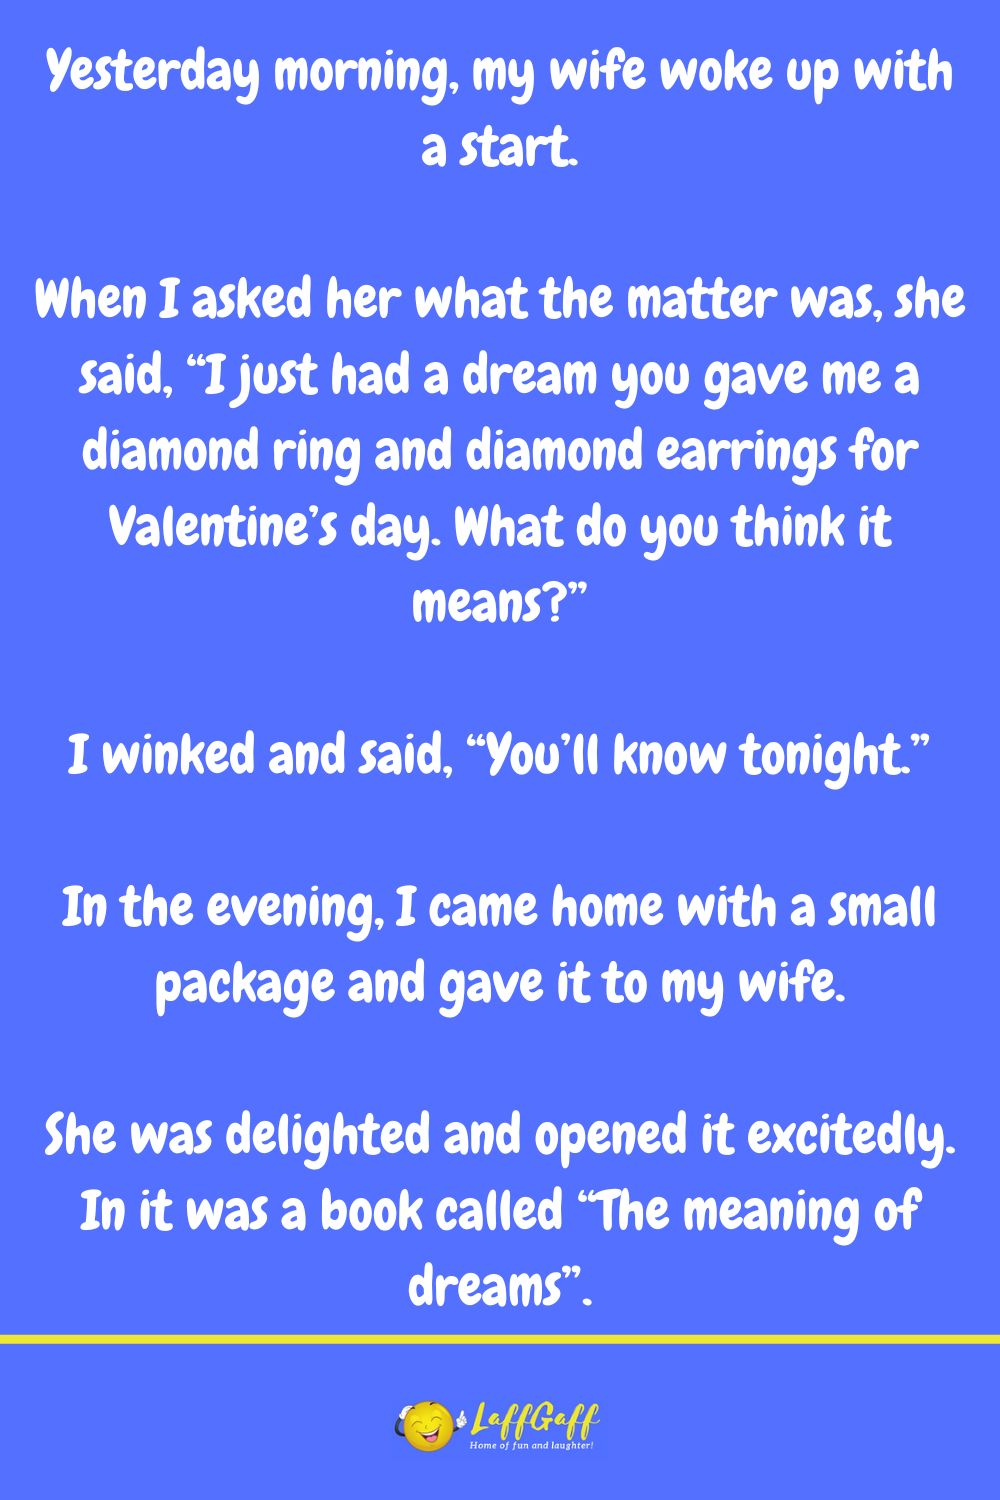 Valentine's Day dream joke from LaffGaff.